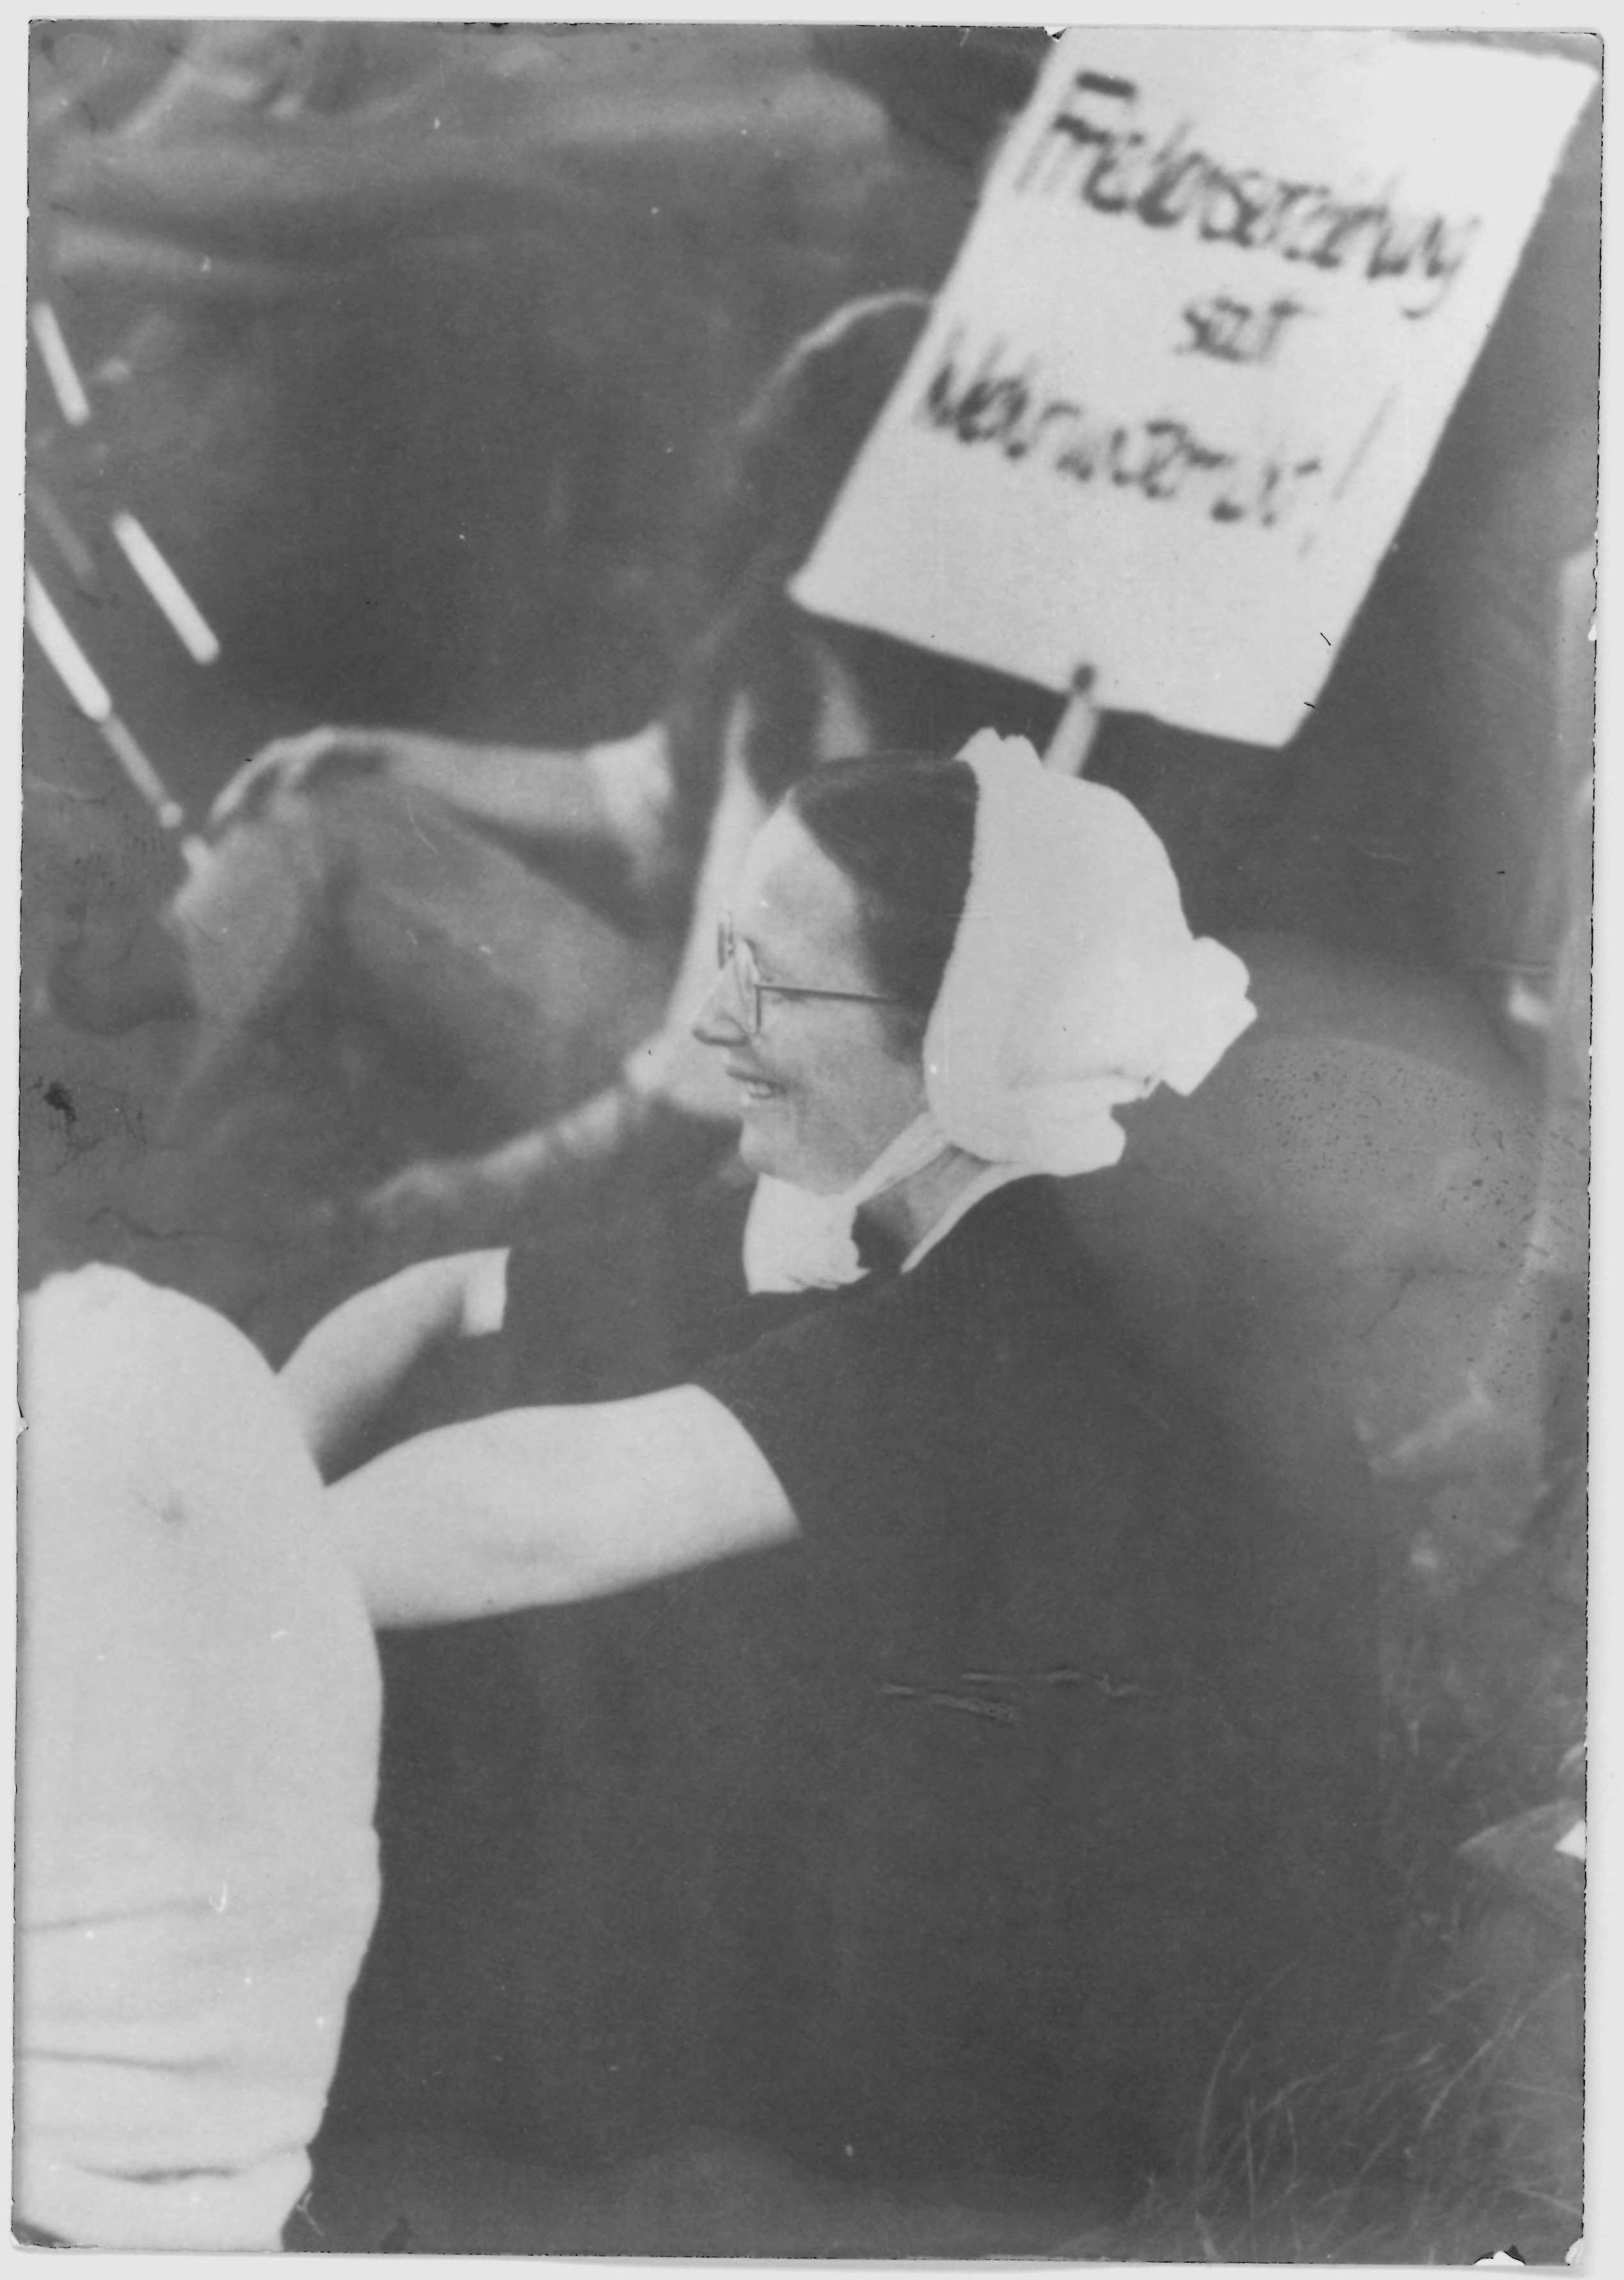 Olof-Palme-Marsch 1987: Nonne mit Plakat: "Friedenserziehung statt Wehrunterricht" (DDR Geschichtsmuseum im Dokumentationszentrum Perleberg CC BY-SA)